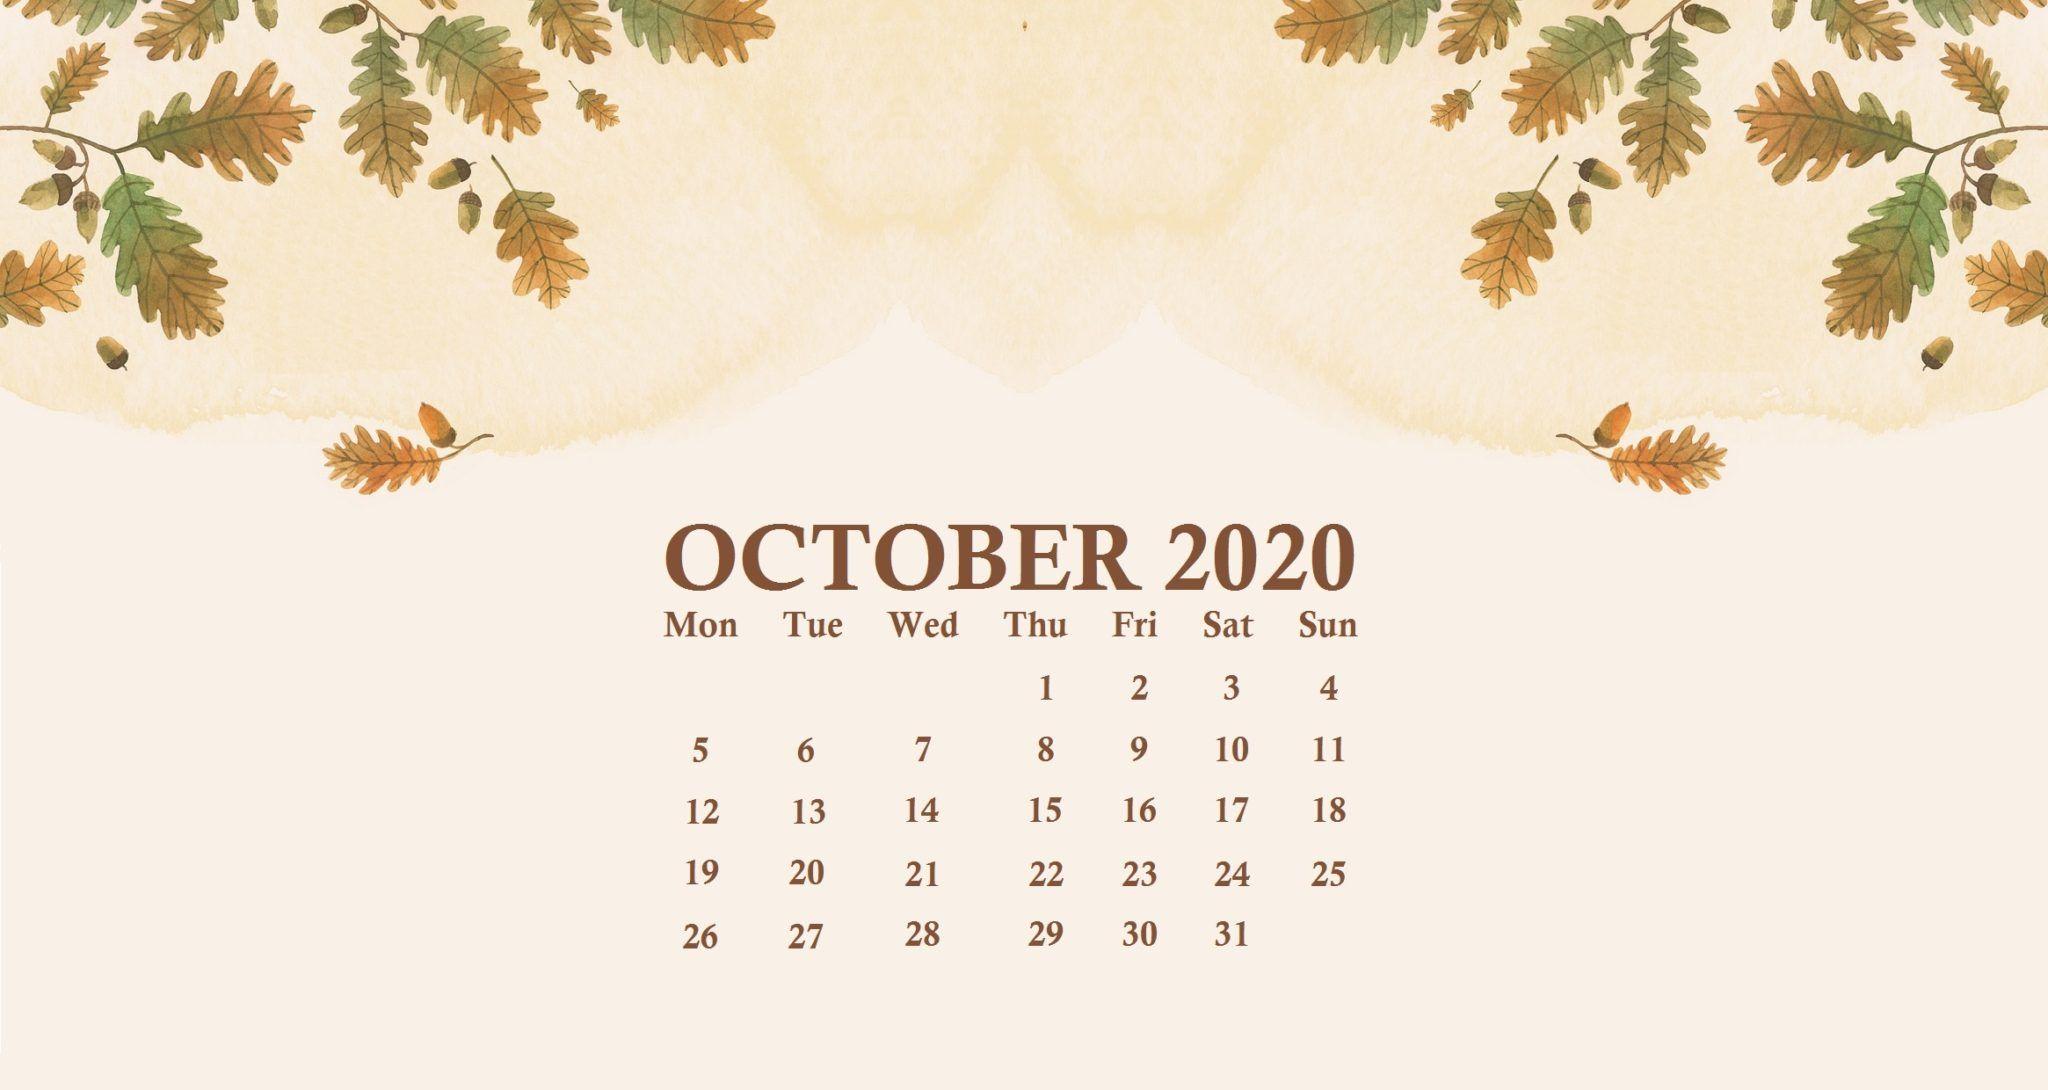 October 2020 Calendar Wallpapers Top Free October 2020 Calendar